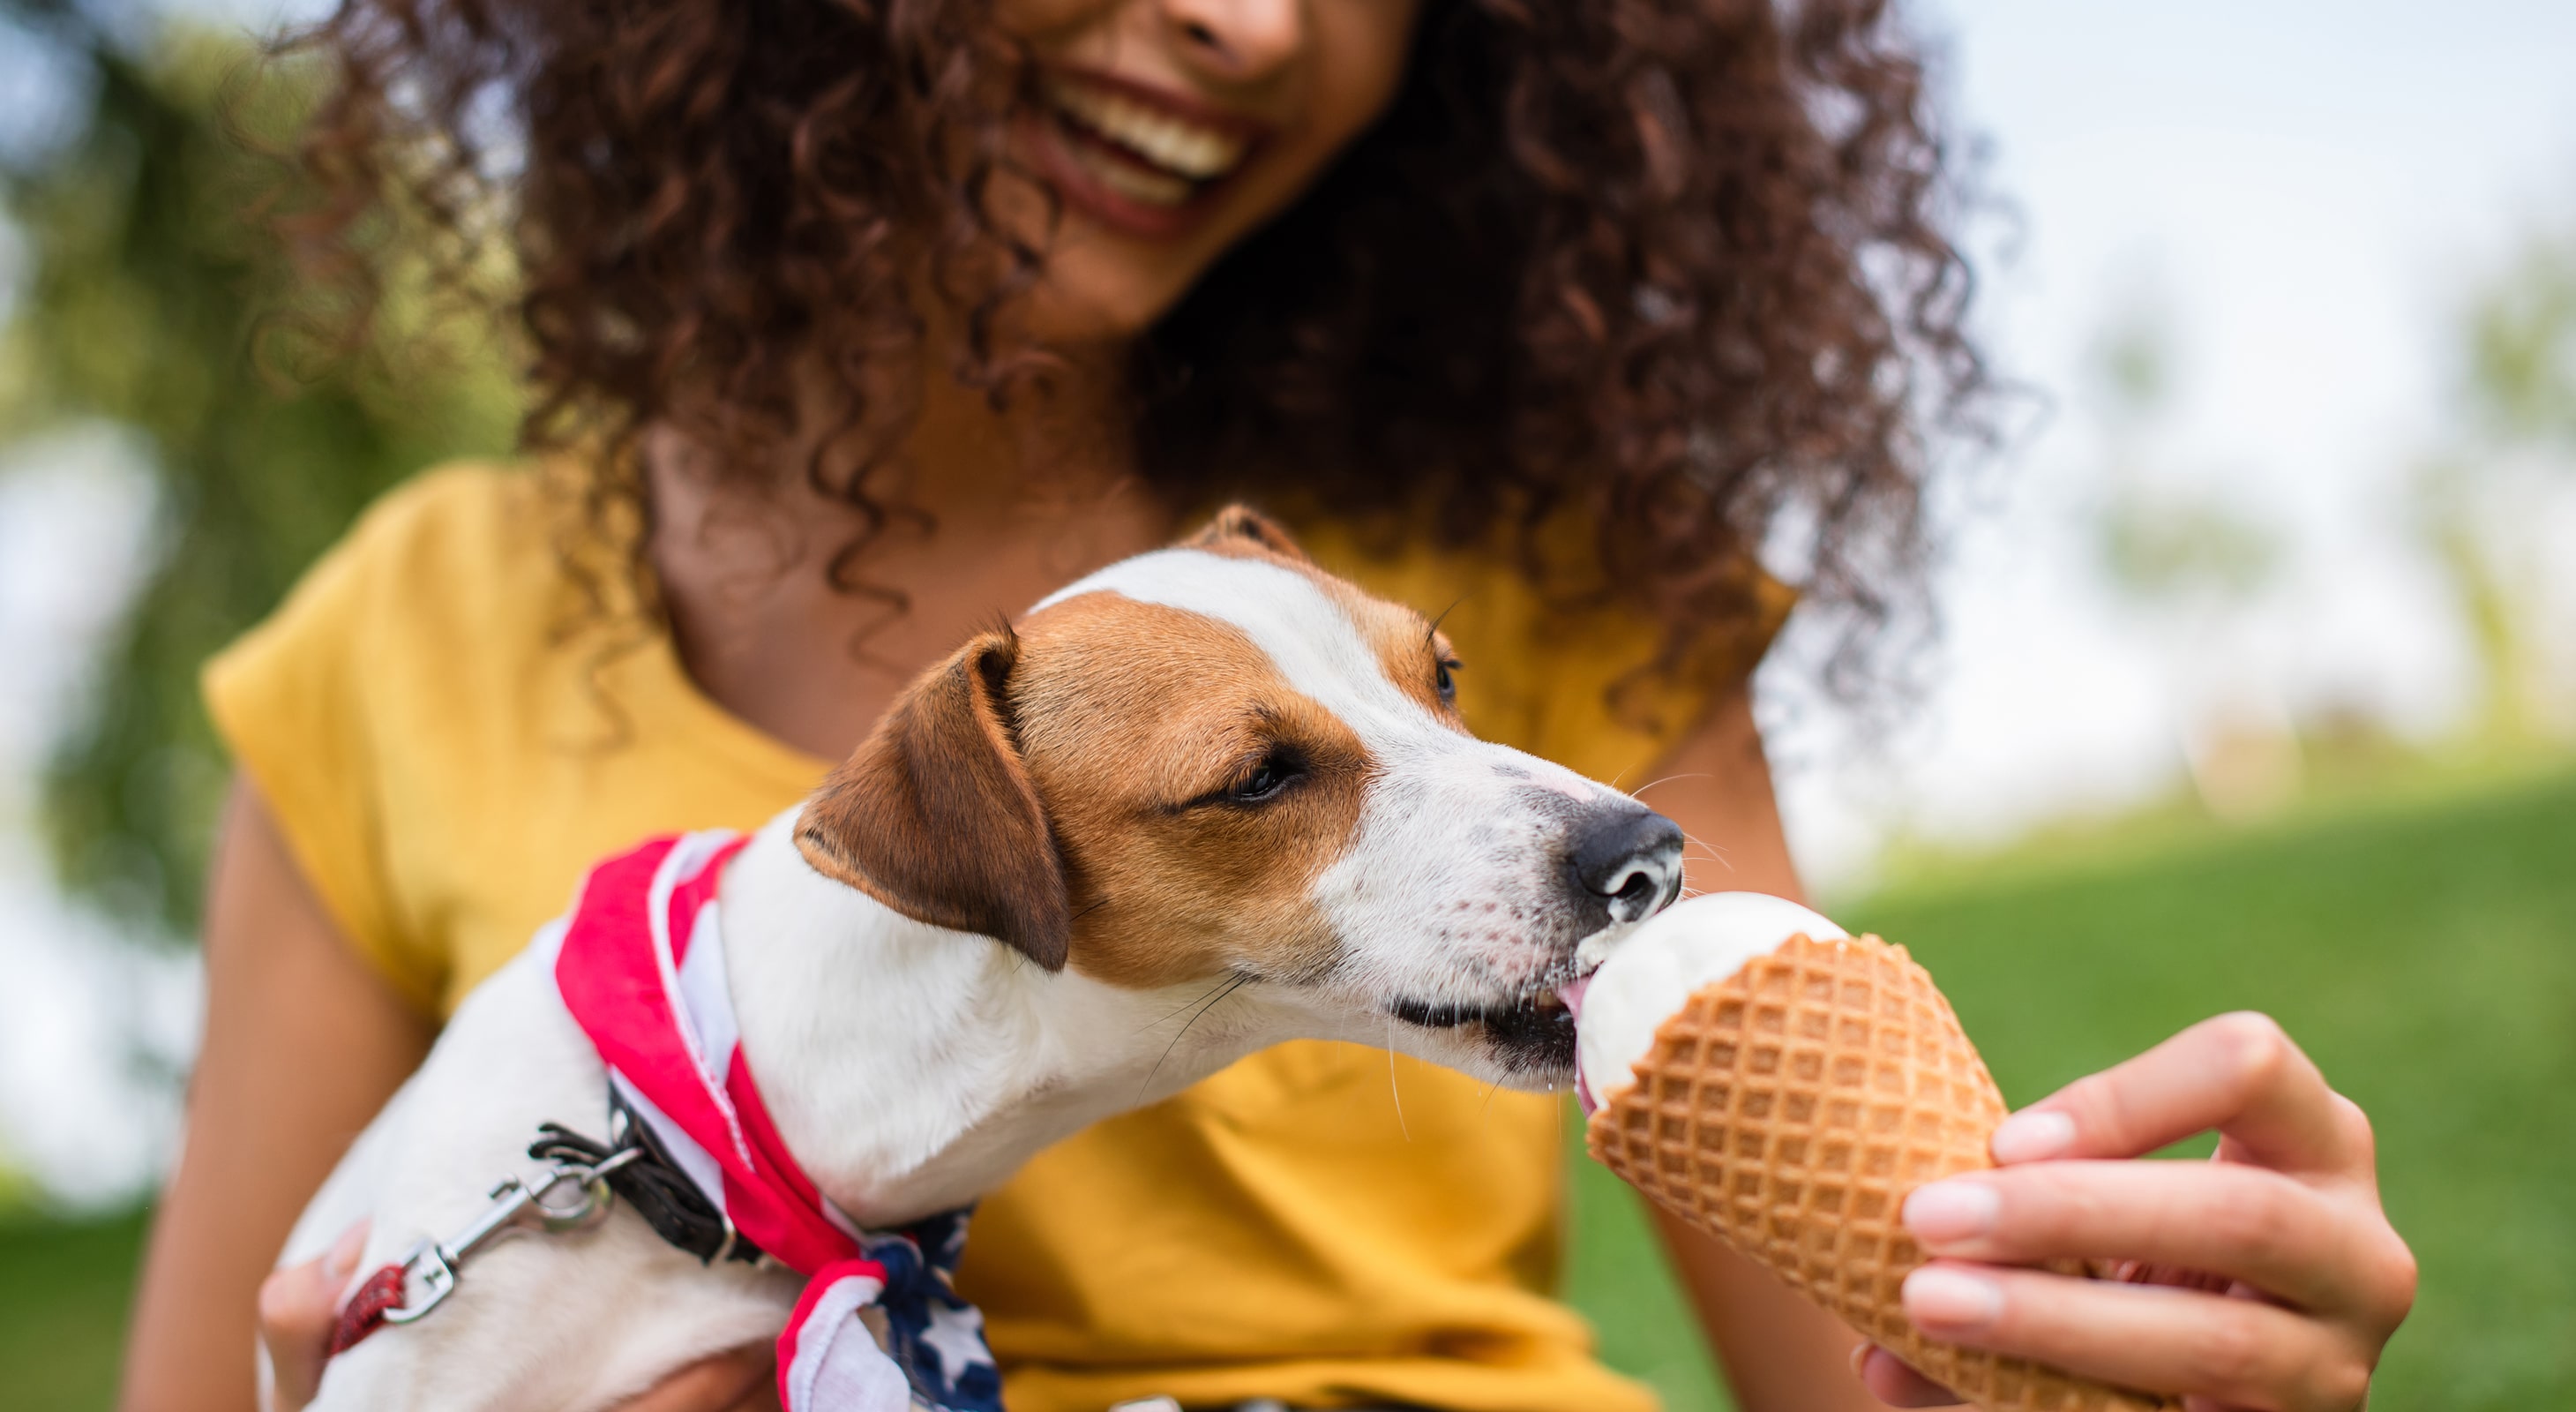 Woman feeding ice cream to dog